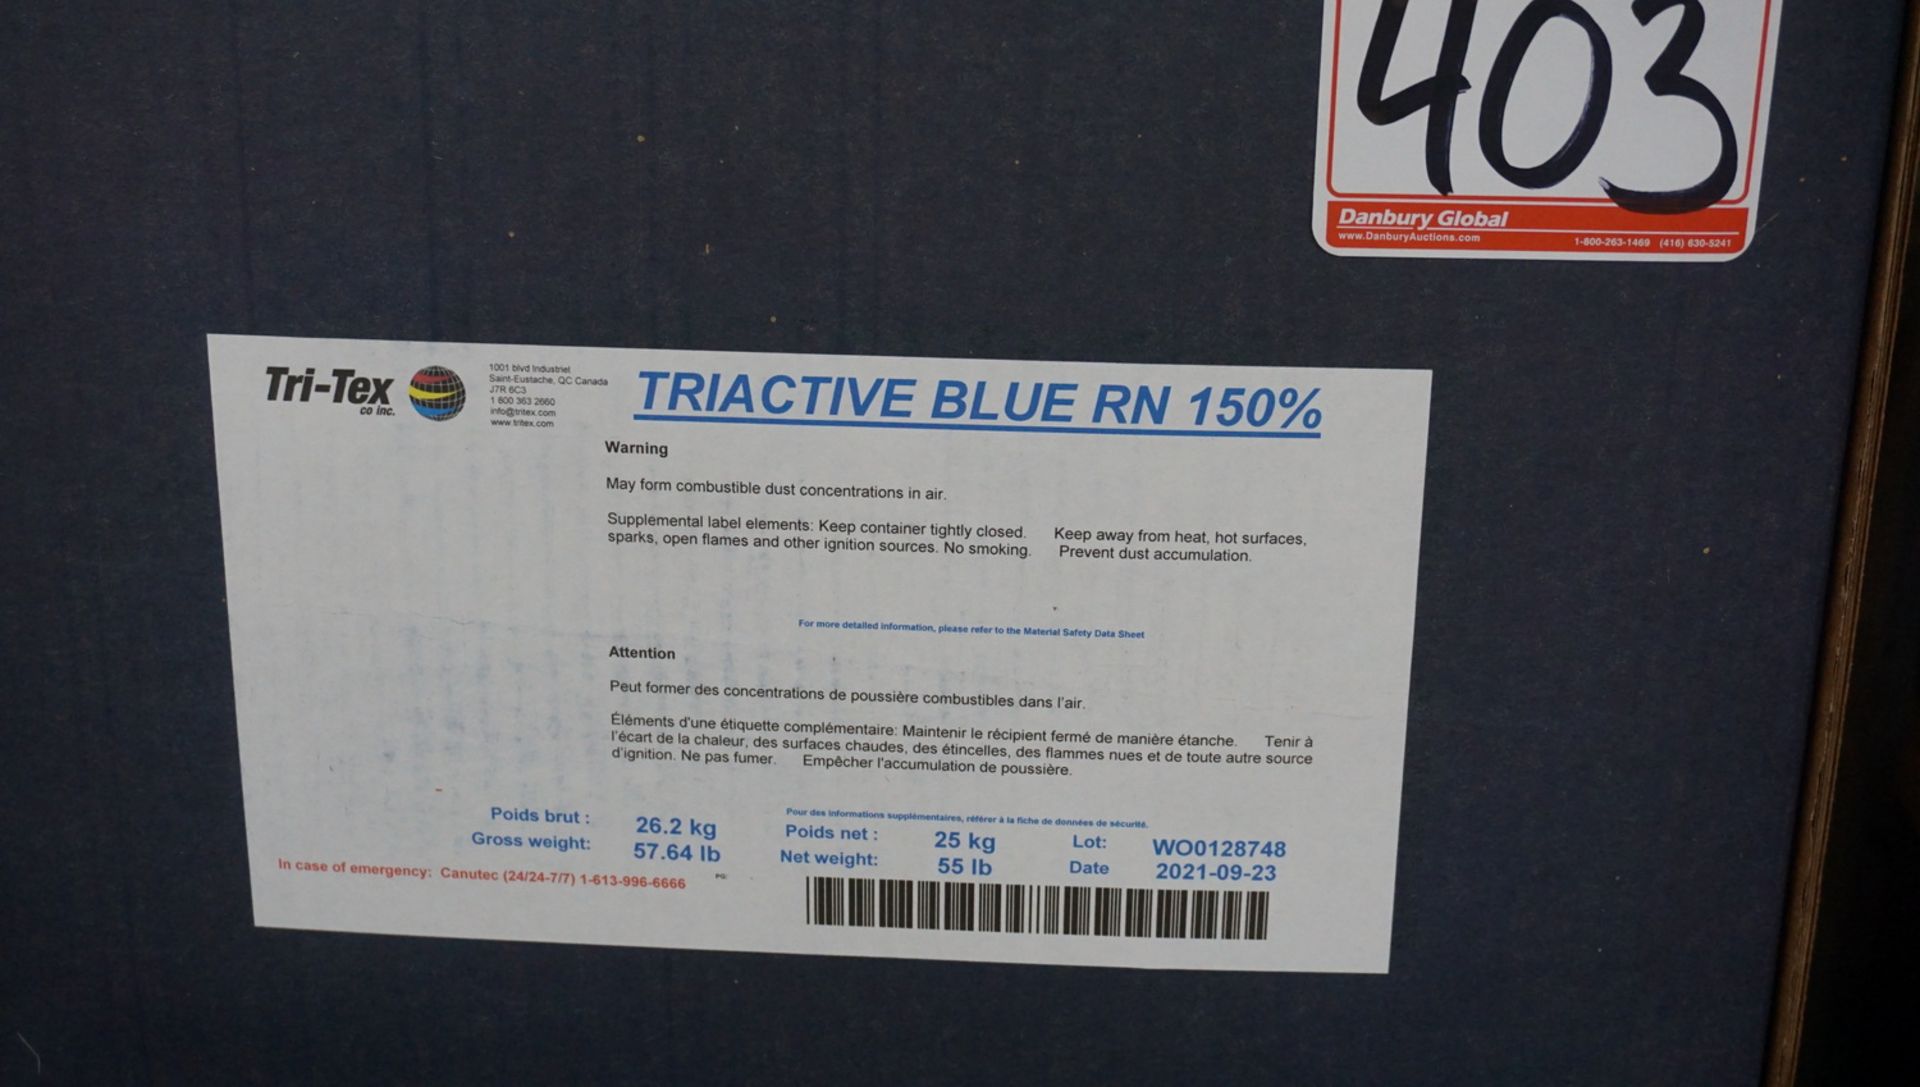 BOXES - ASSTD TRI-TEX TRIACTIVE BLUE DF-LF, RN 150% TRISETILE BLUE RBL (25KG/BOX) - Image 2 of 4